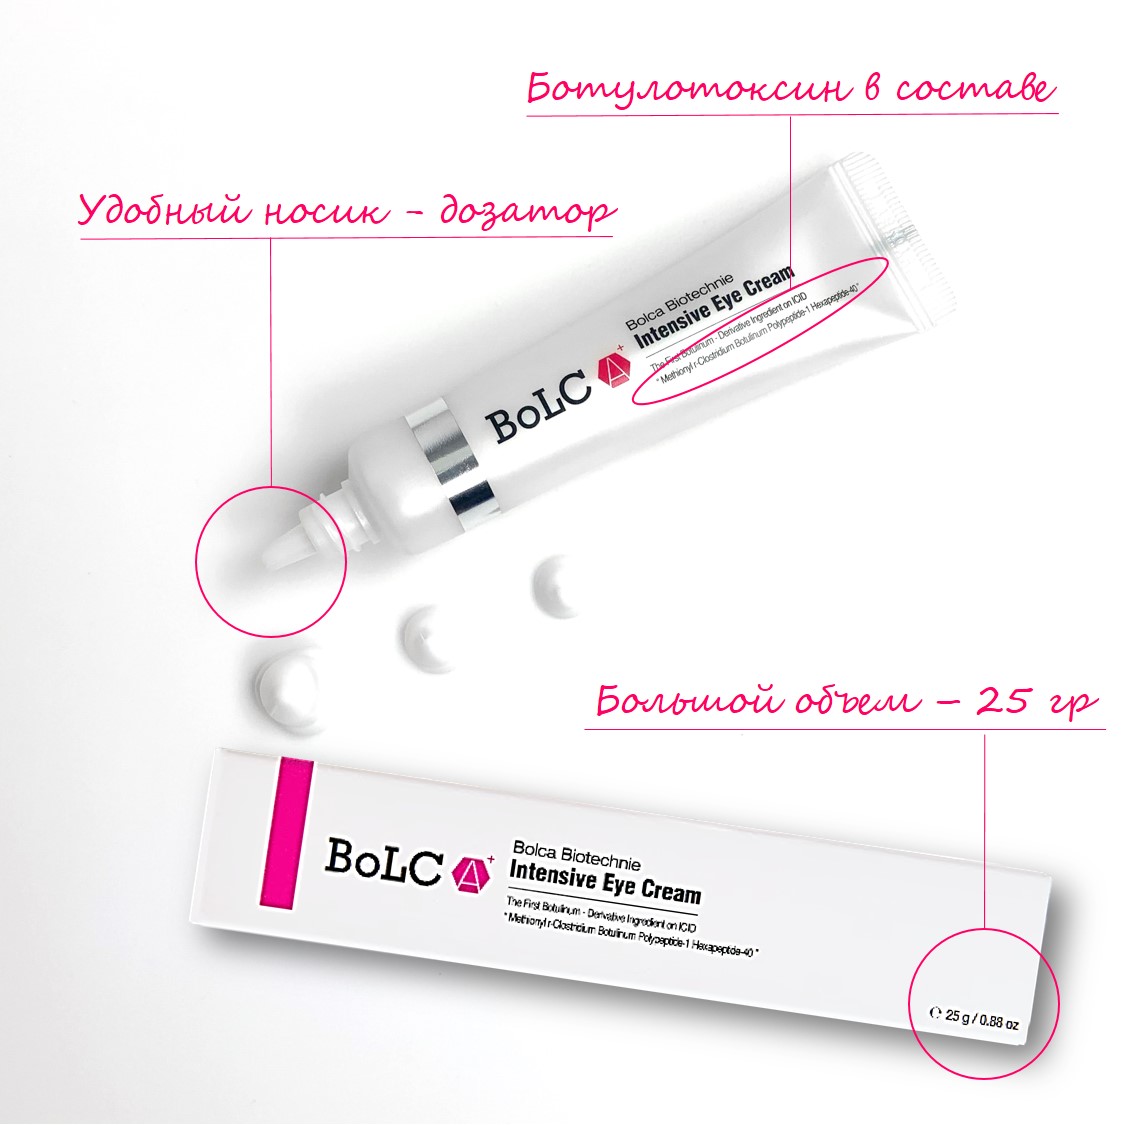  BoLCA Biotechnie Intensive Eye Cream 